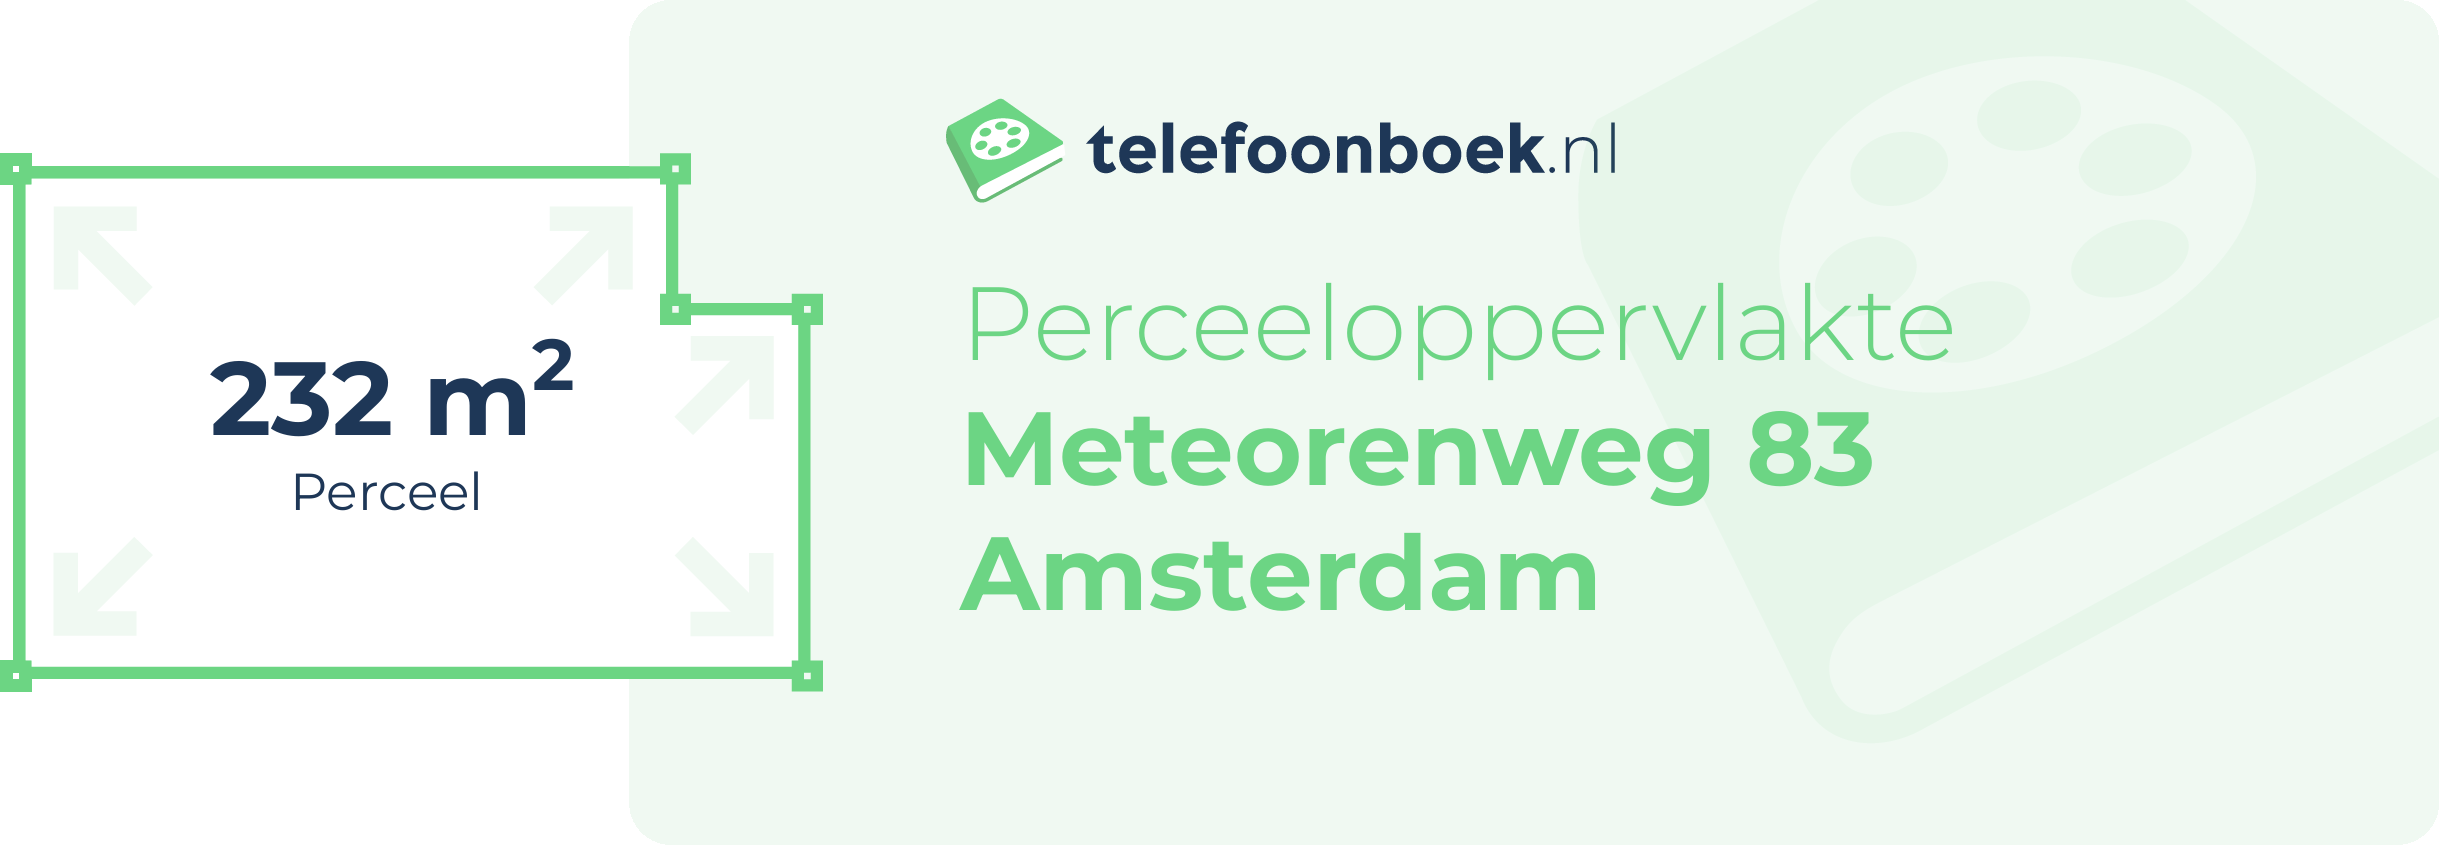 Perceeloppervlakte Meteorenweg 83 Amsterdam